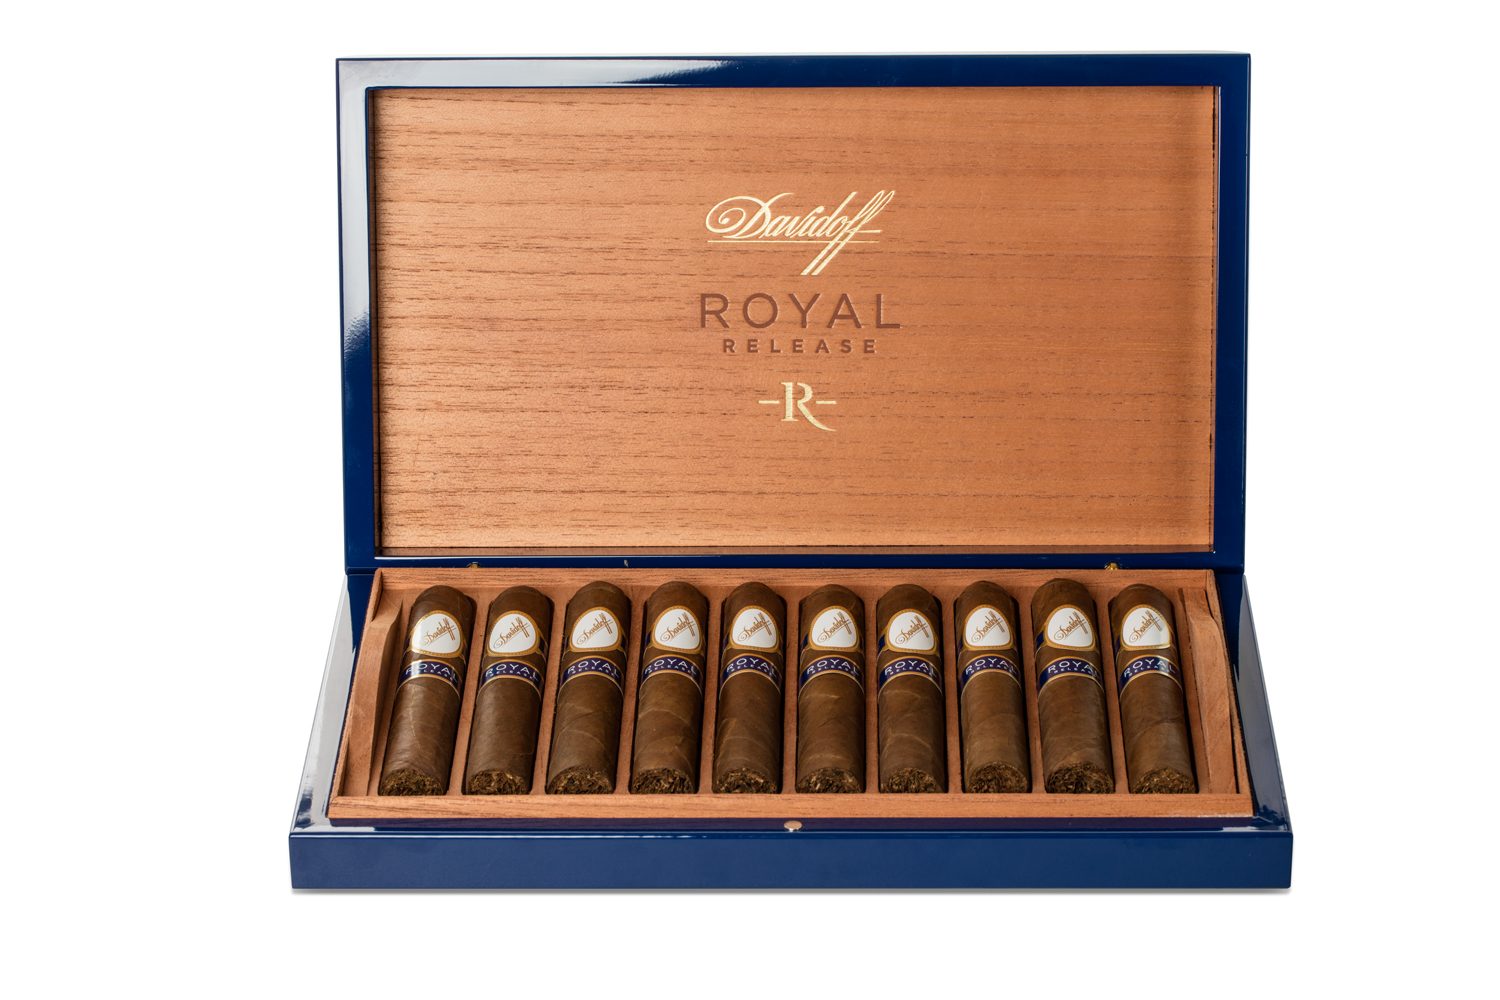 Davidoff Royal Release Robusto cigars